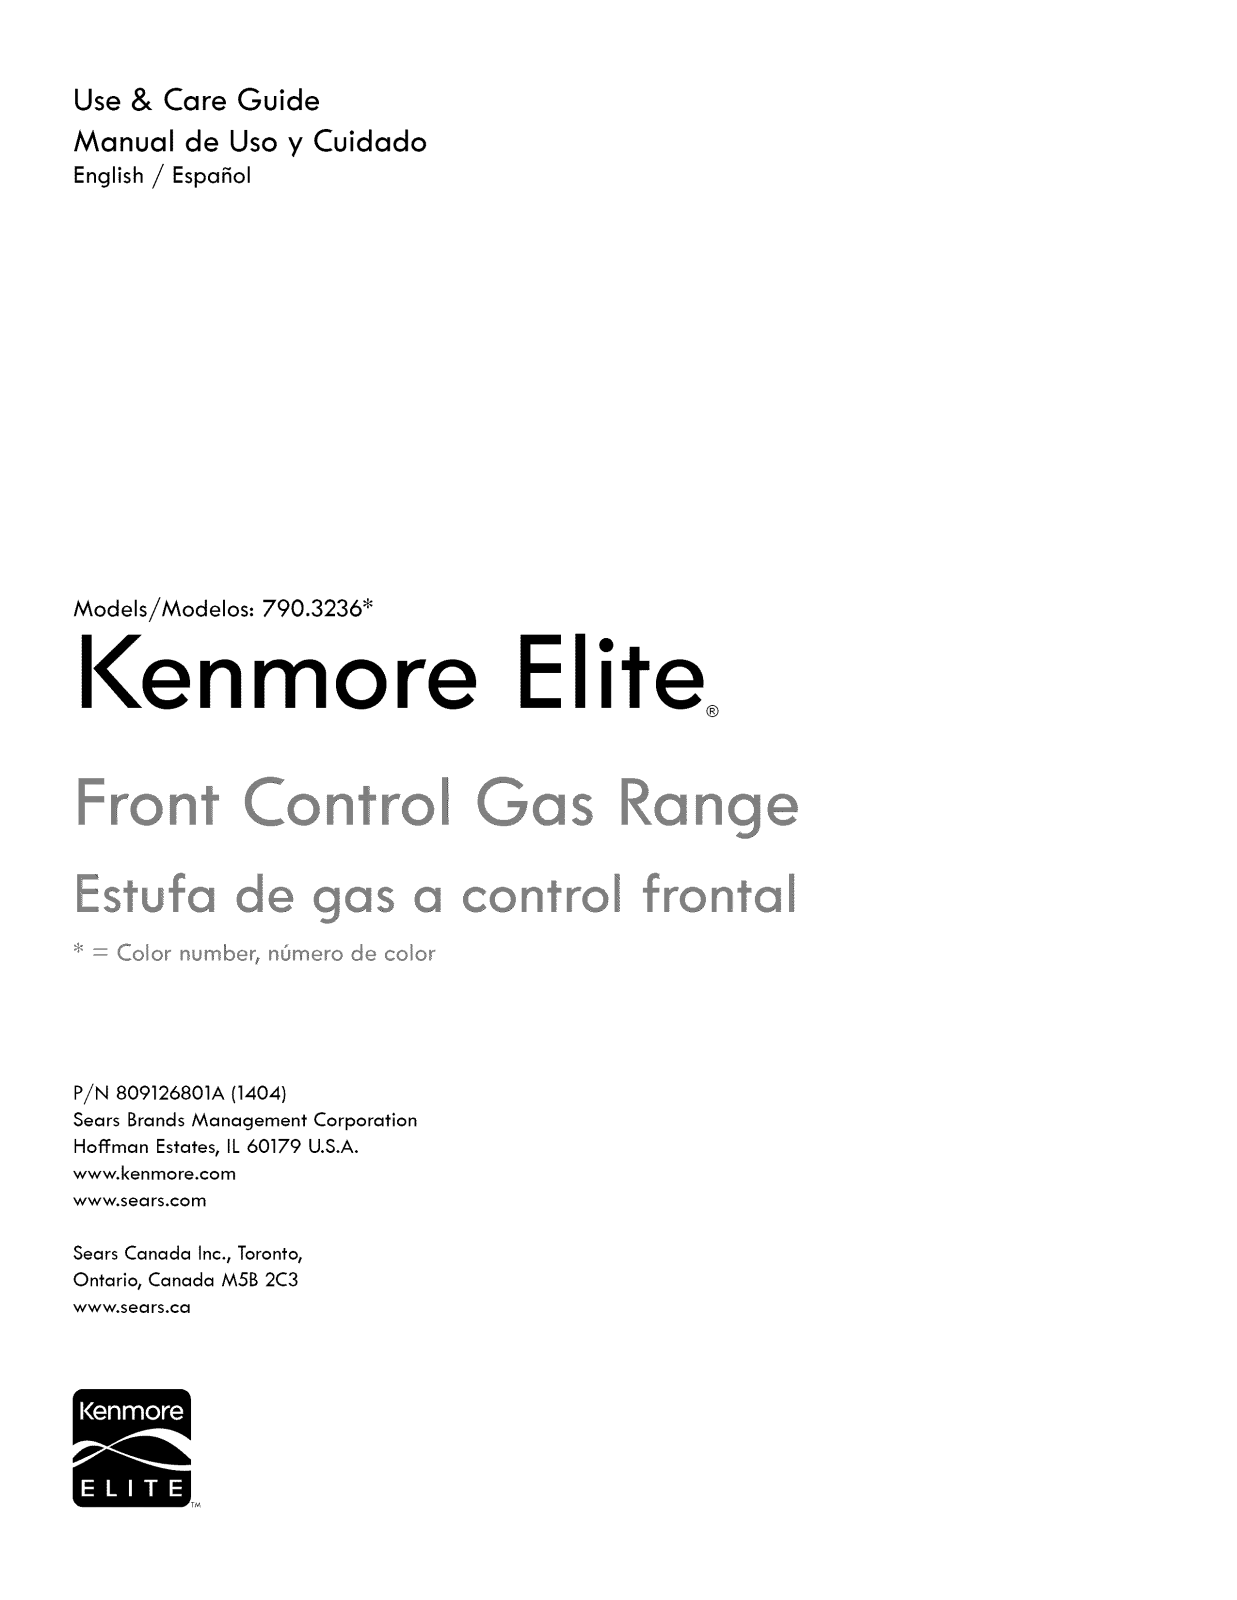 Kenmore Elite 79032363410, 79032363411, 79032363412, 79032363413, 79032363414 Owner’s Manual